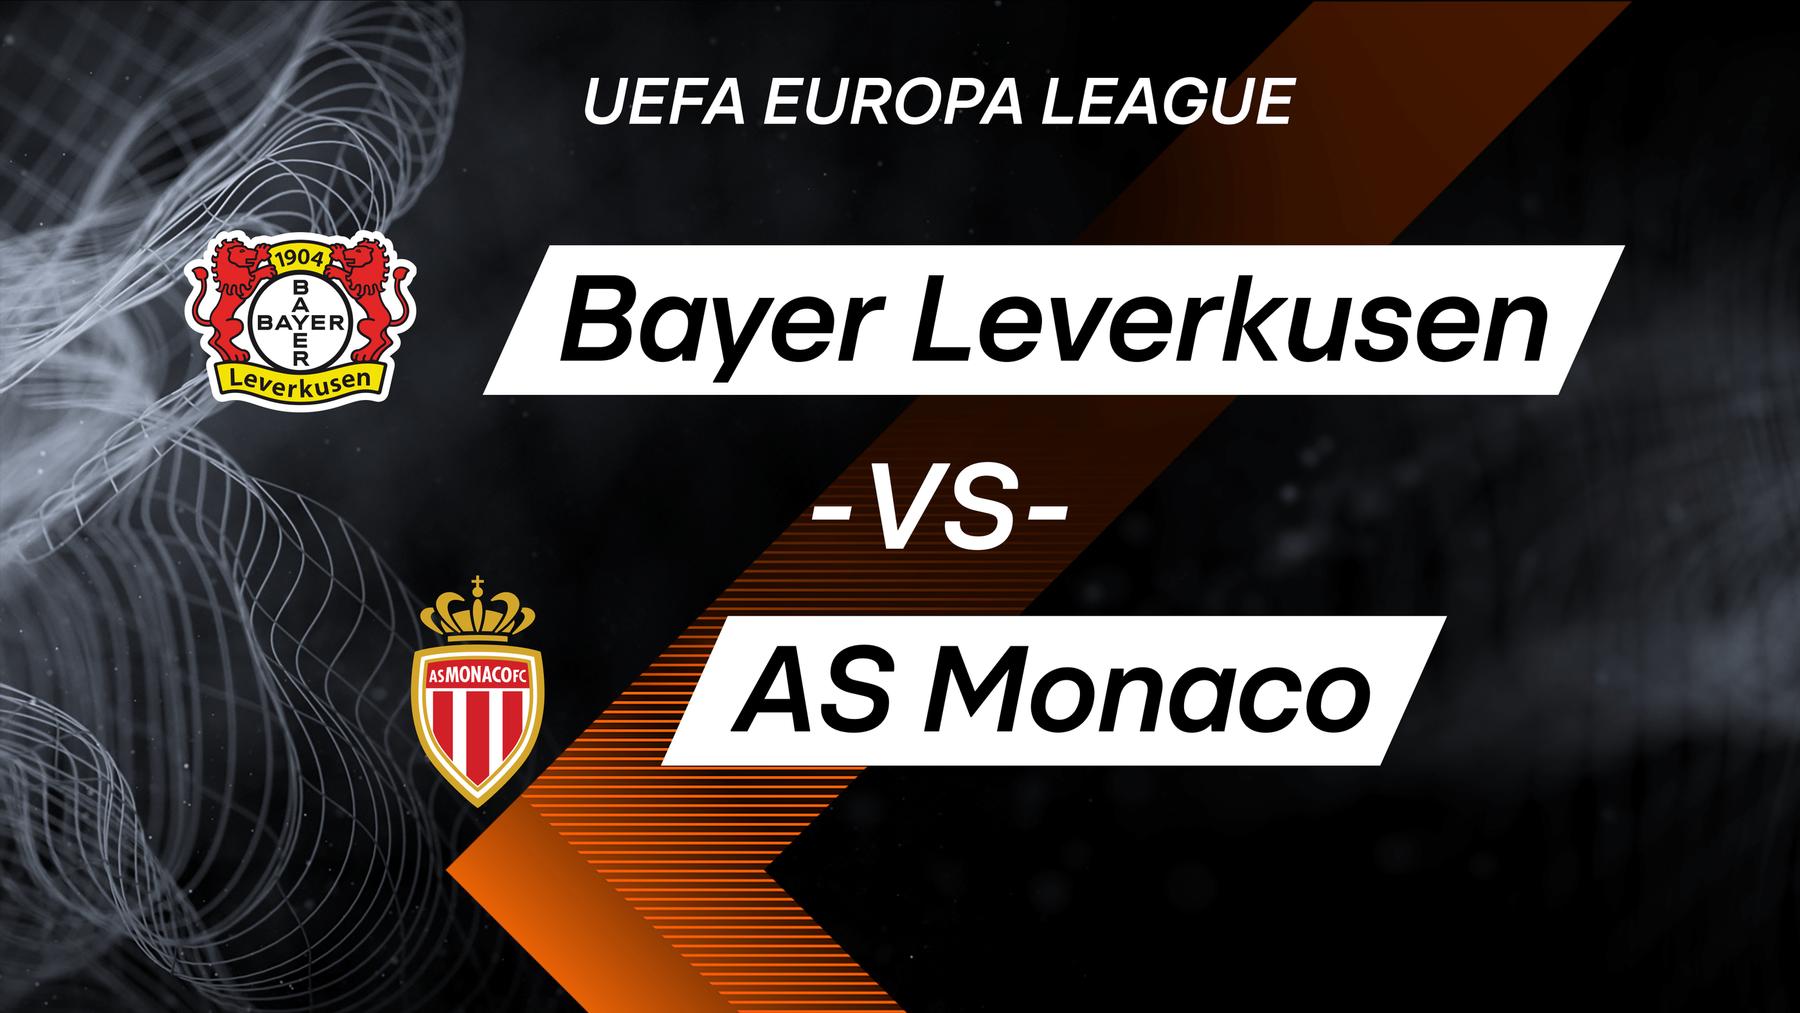 Bayer Leverkusen vs. AS Monaco